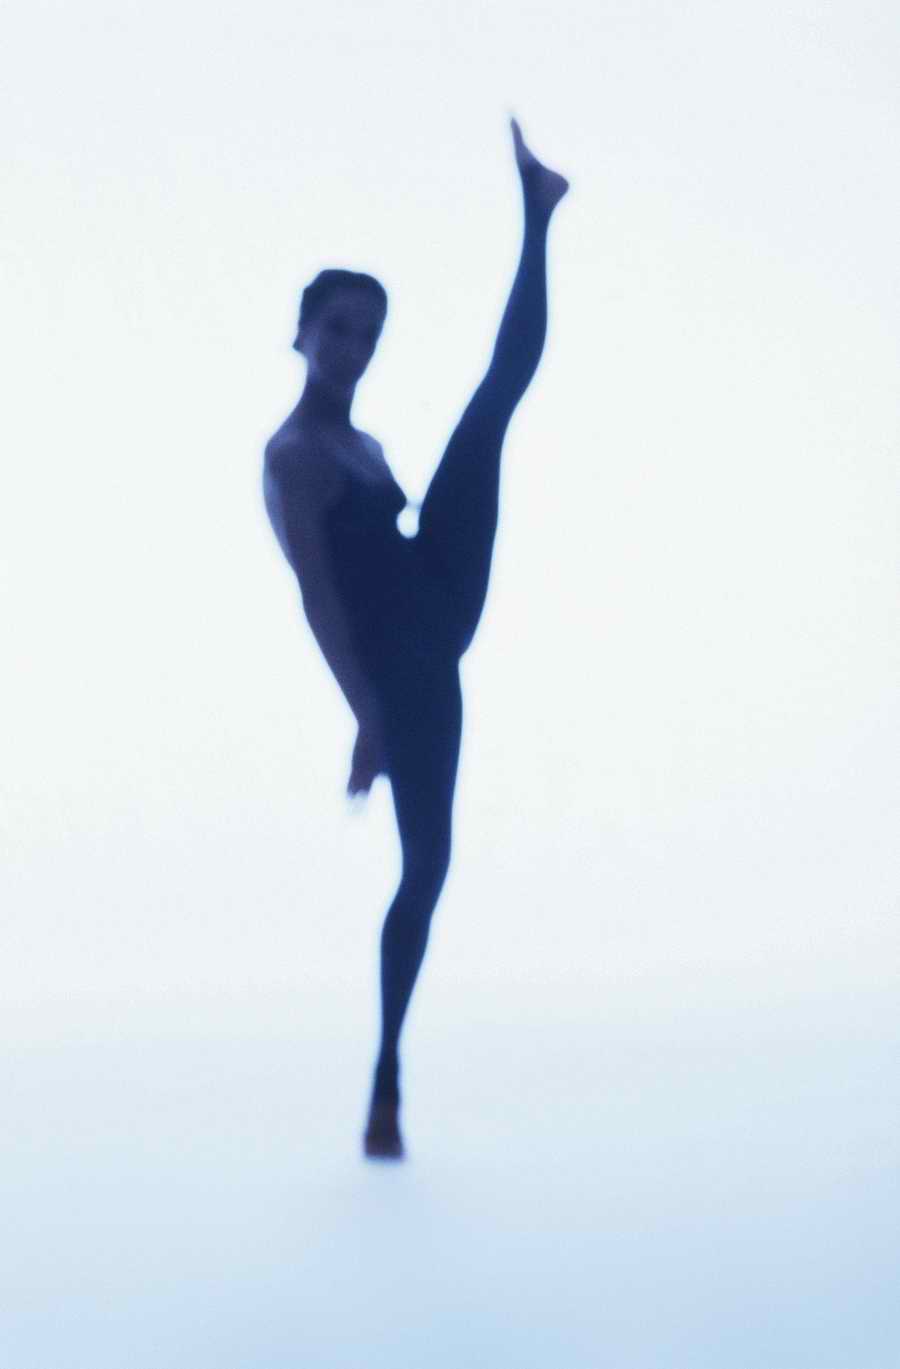 Ballet and Dance - Stockbyte  ></a>
<script language=JavaScript> 
  var txt = 